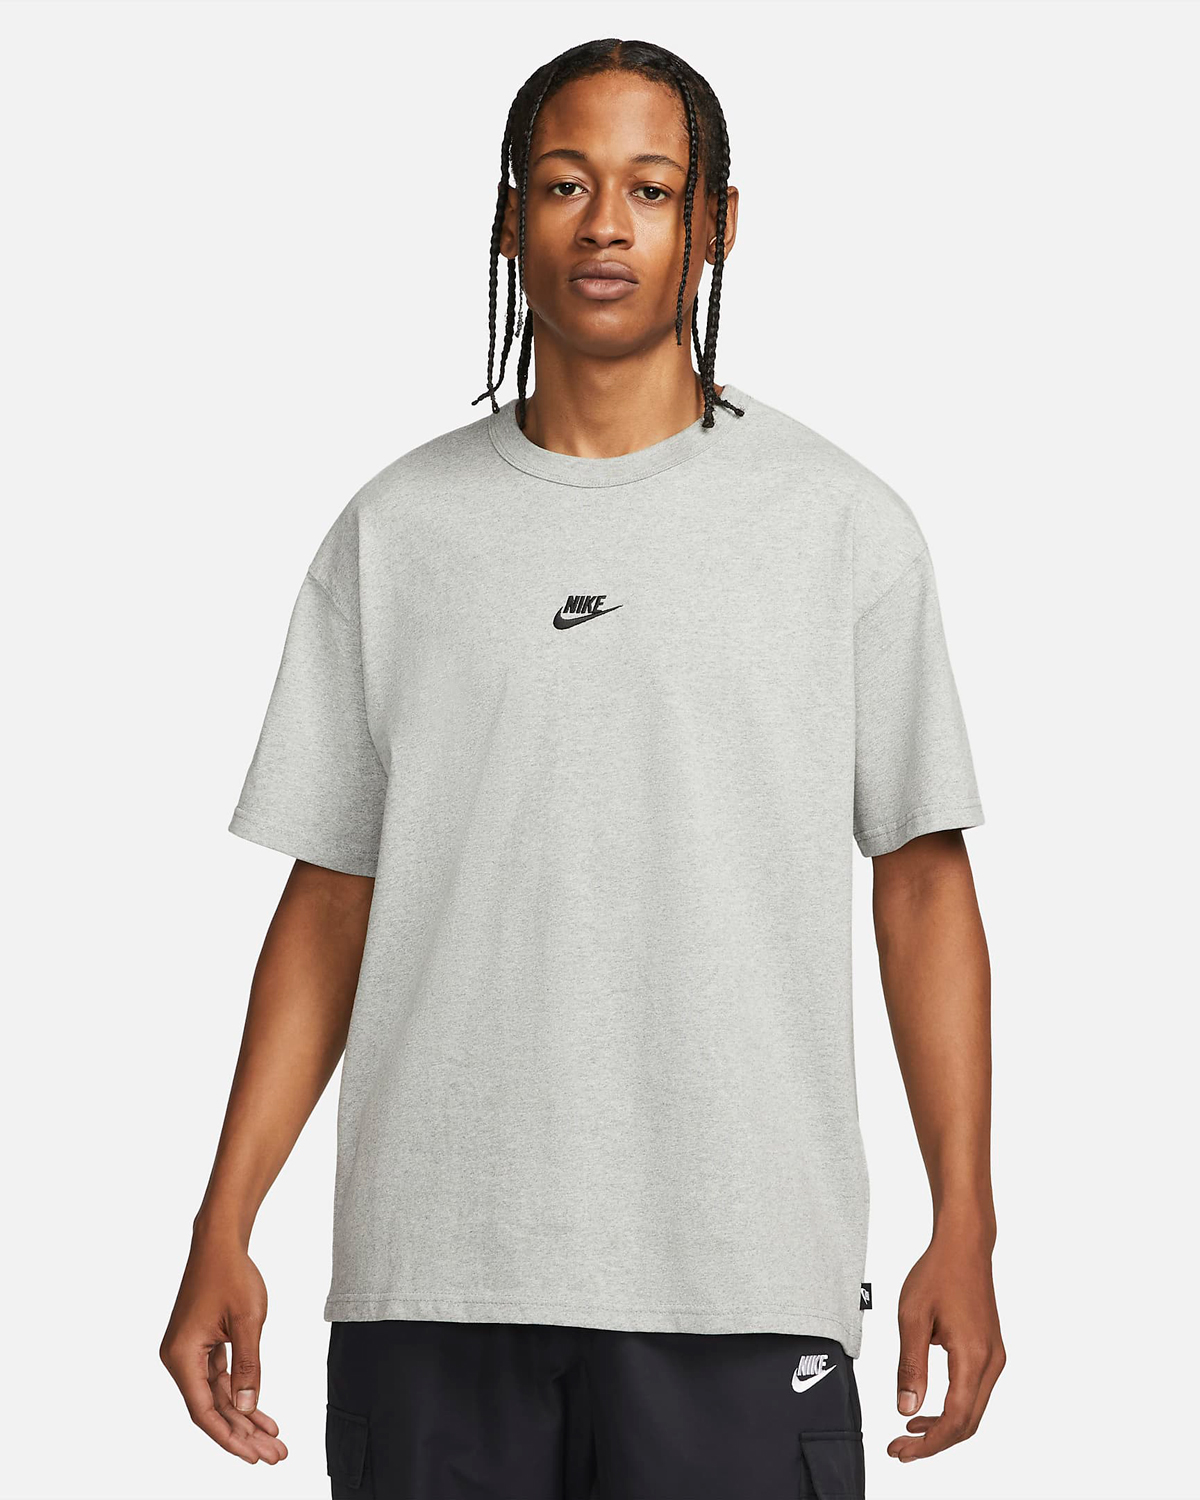 Nike-Sportswear-Premium-Essentials-T-Shirt-Grey-Black